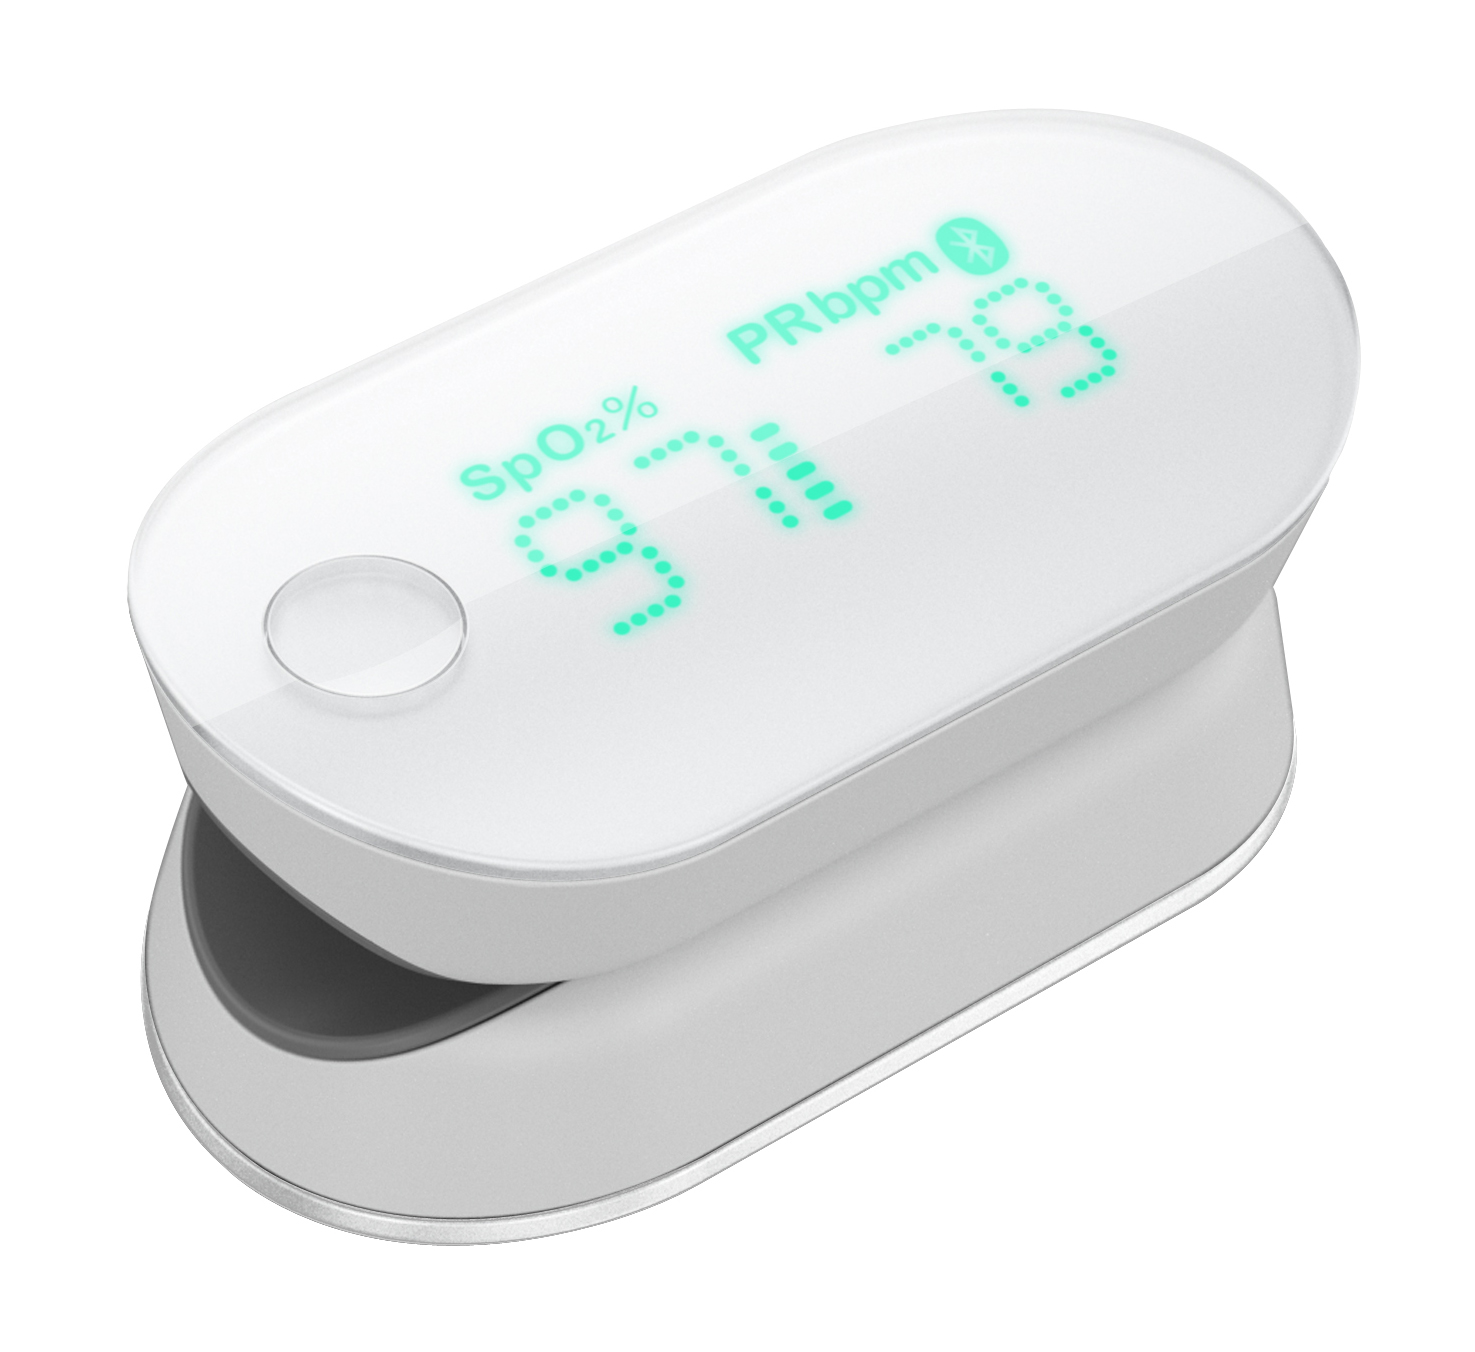 iHealth AIR Bluetooth Pulse Oximeter Fingertip image 0